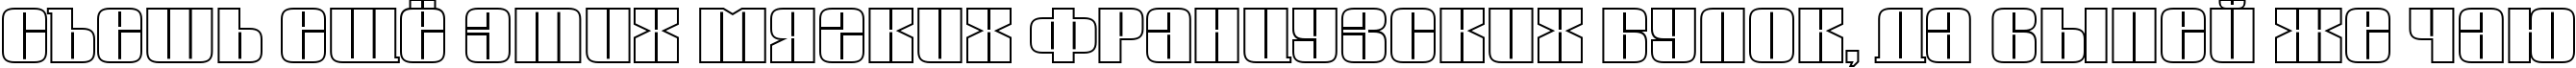 Пример написания шрифтом a_GlobusOtl текста на русском